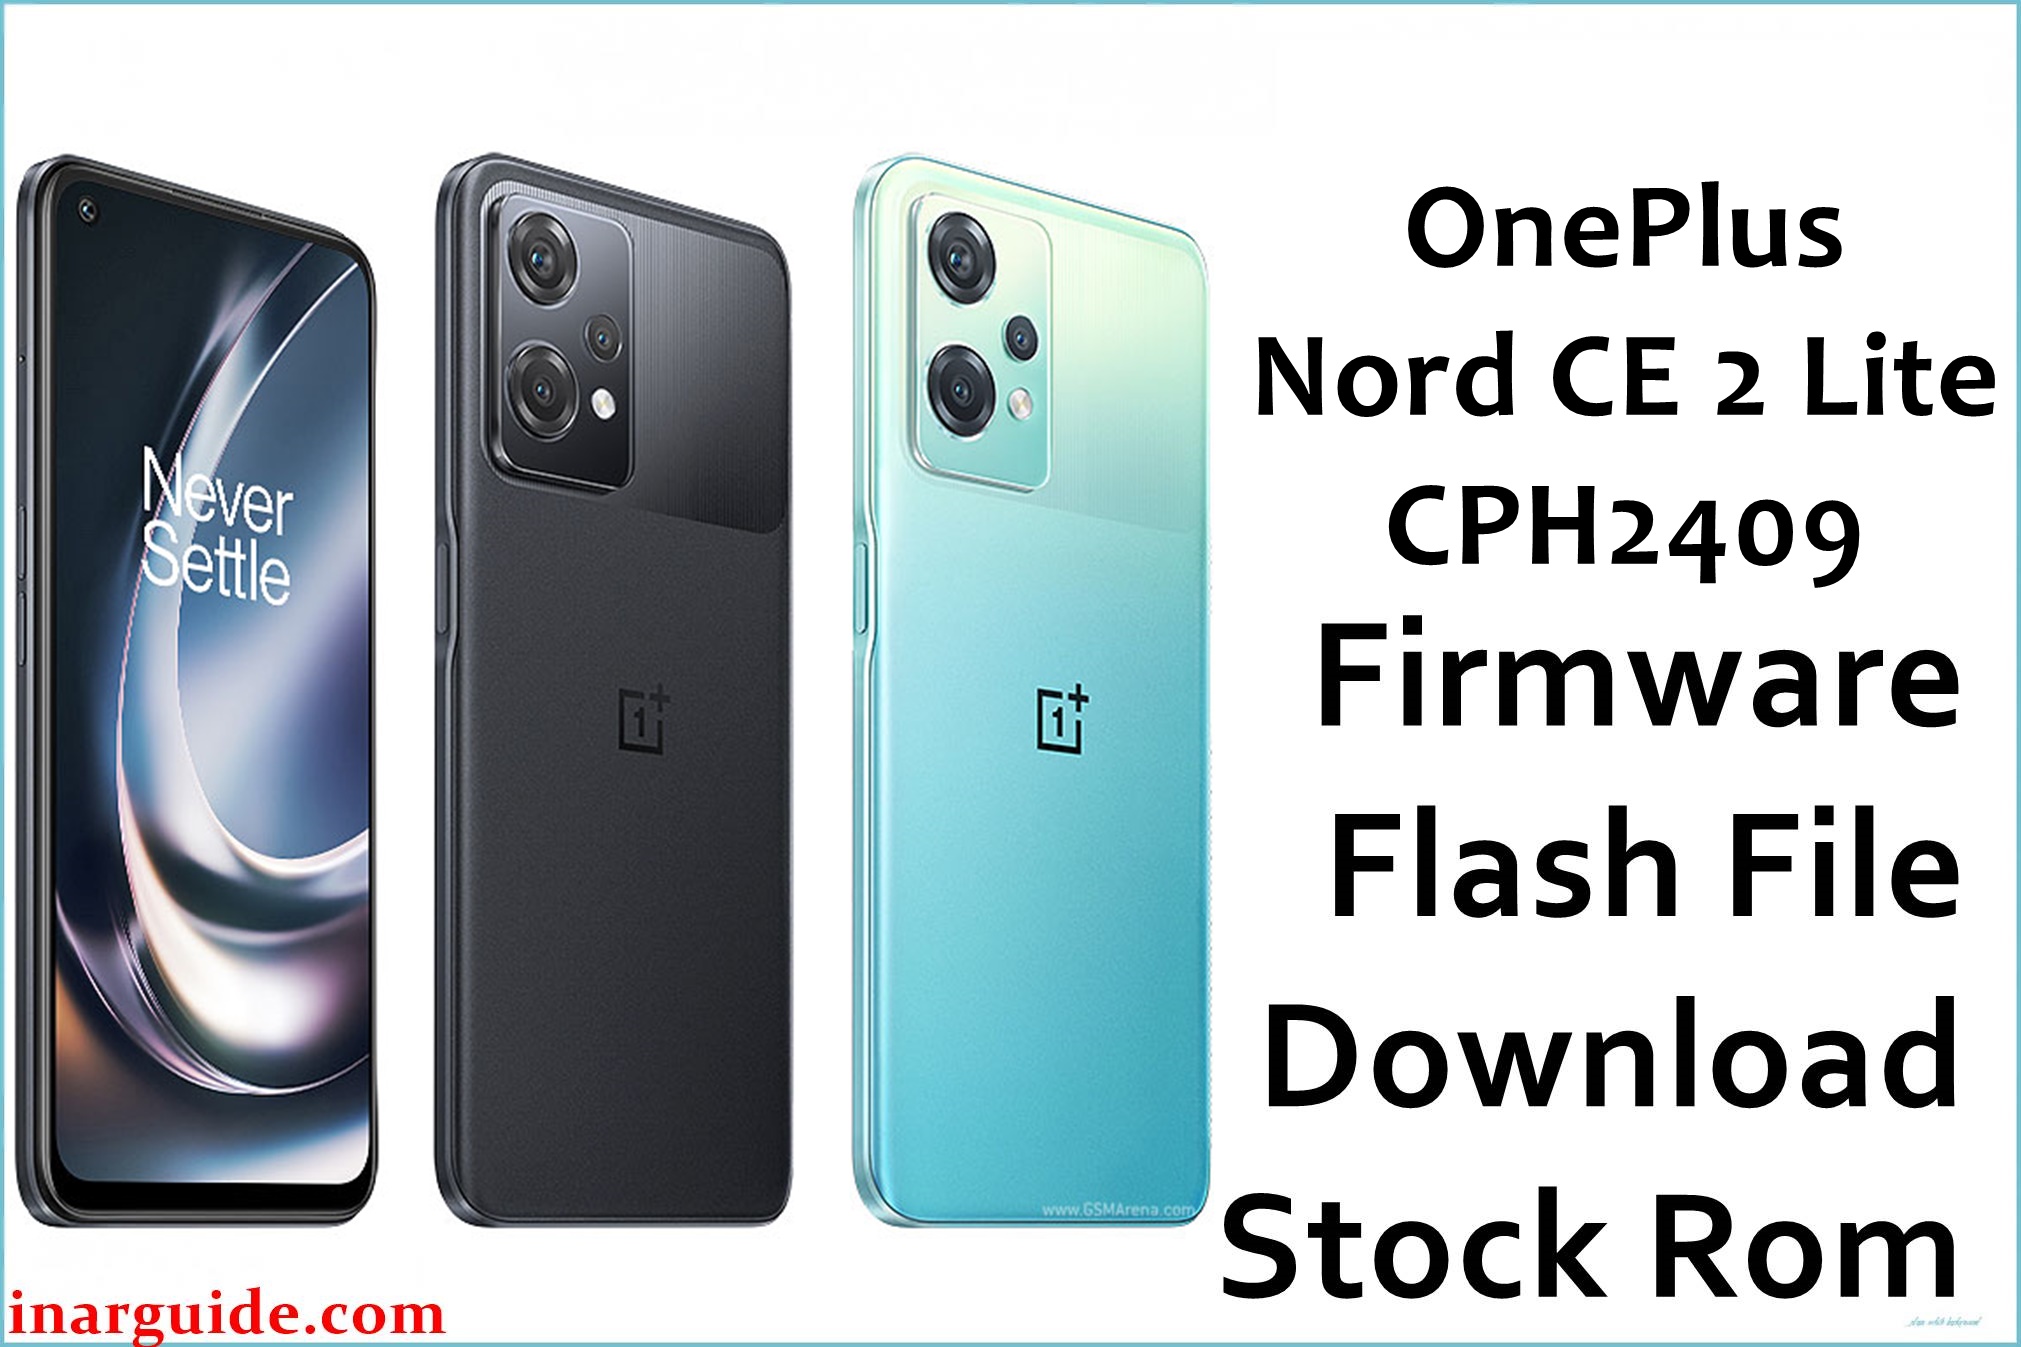 OnePlus Nord CE 2 Lite CPH2409